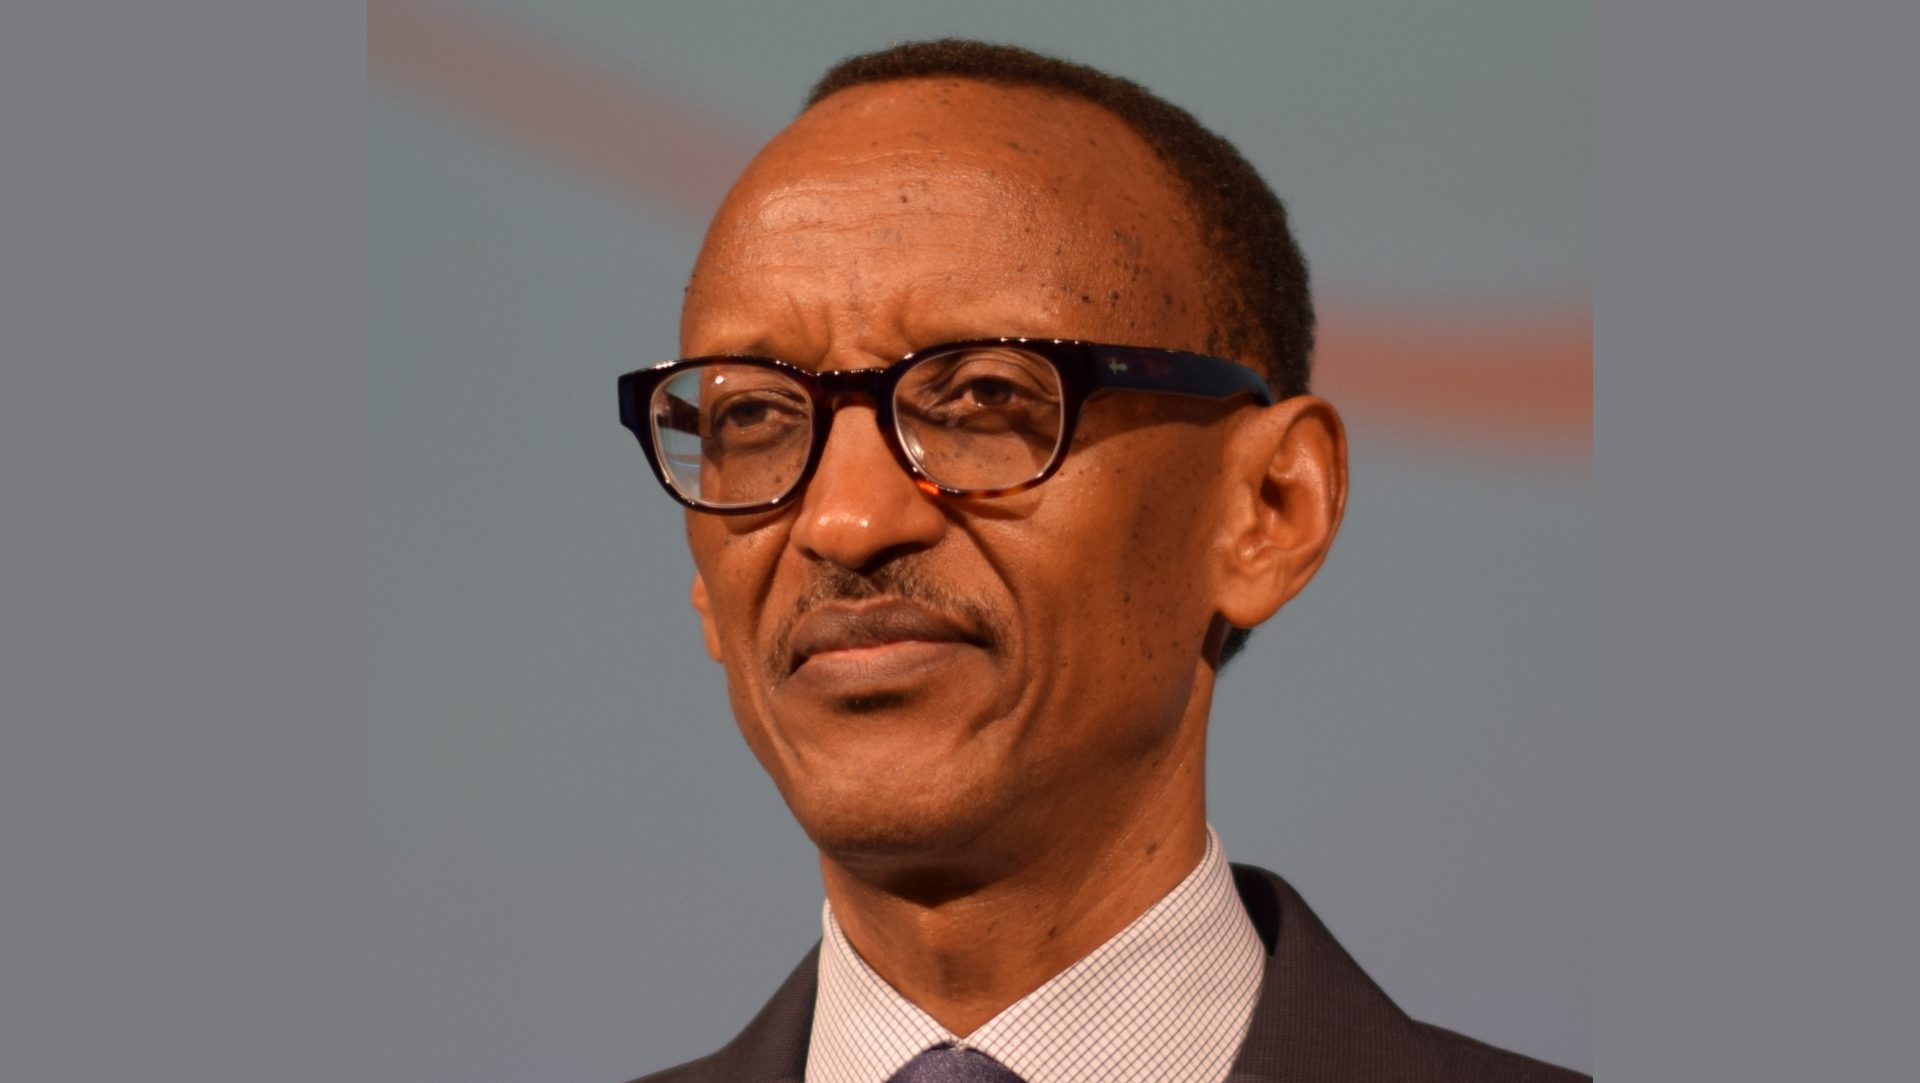 Le président rwandais Paul Kagame en 2014 (photo wikimedia commons Veni Markovski CC BY-SA 4.0)